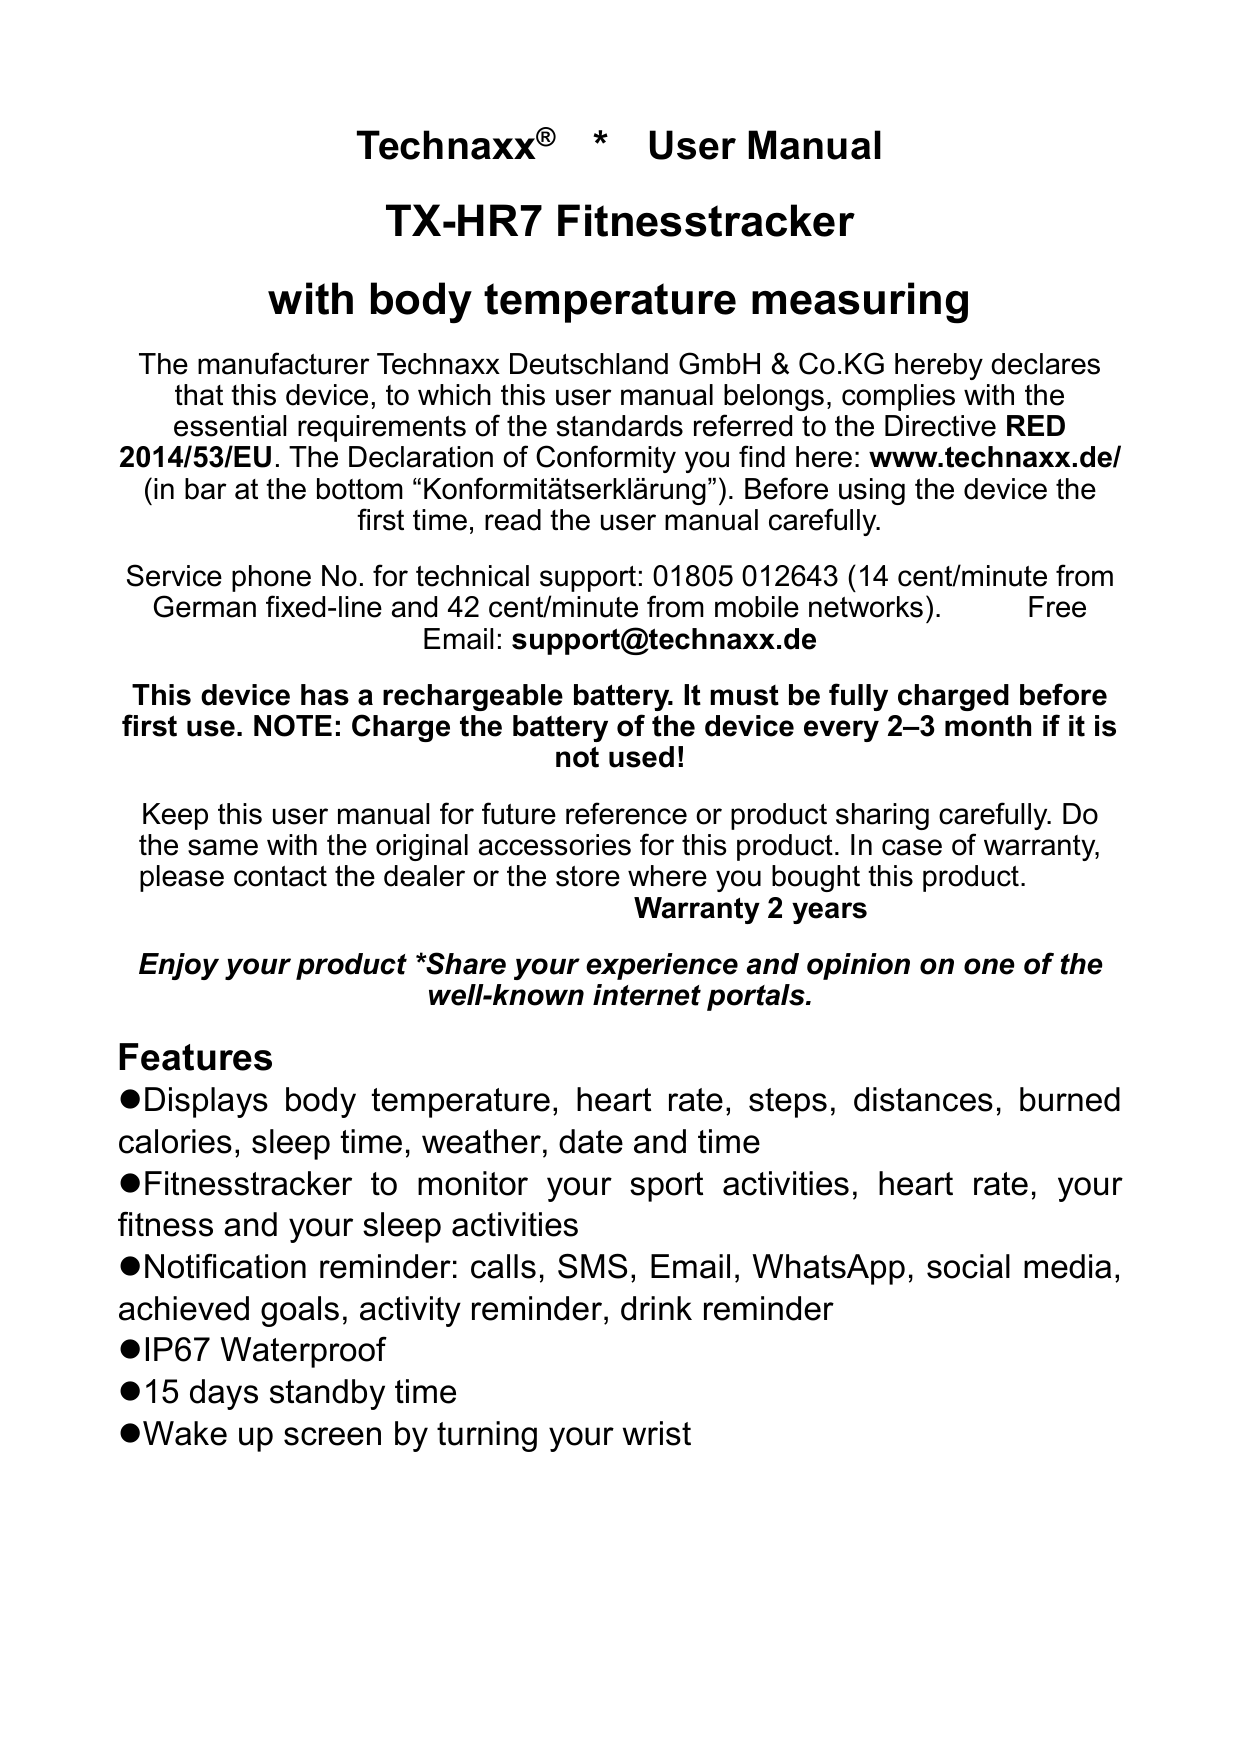 Technaxx TX-HR7 Fitnesstracker Owner's Manual | Manualzz